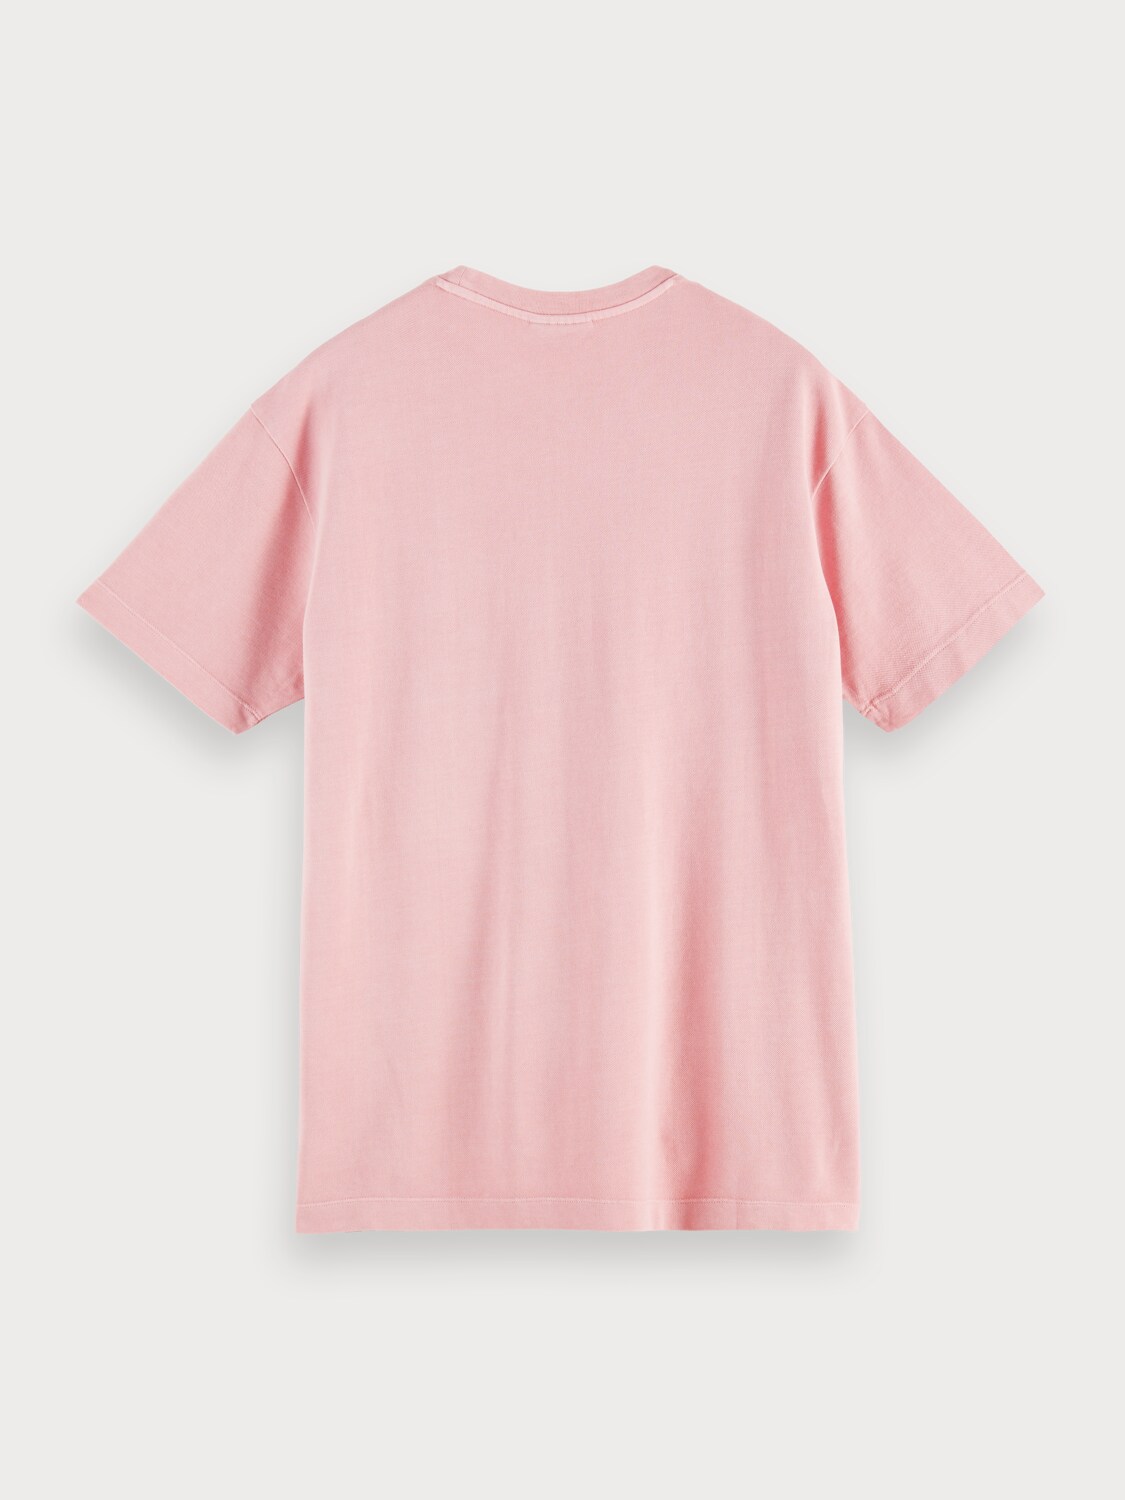 Organic cotton garment-dyed pique crewneck t-shirt